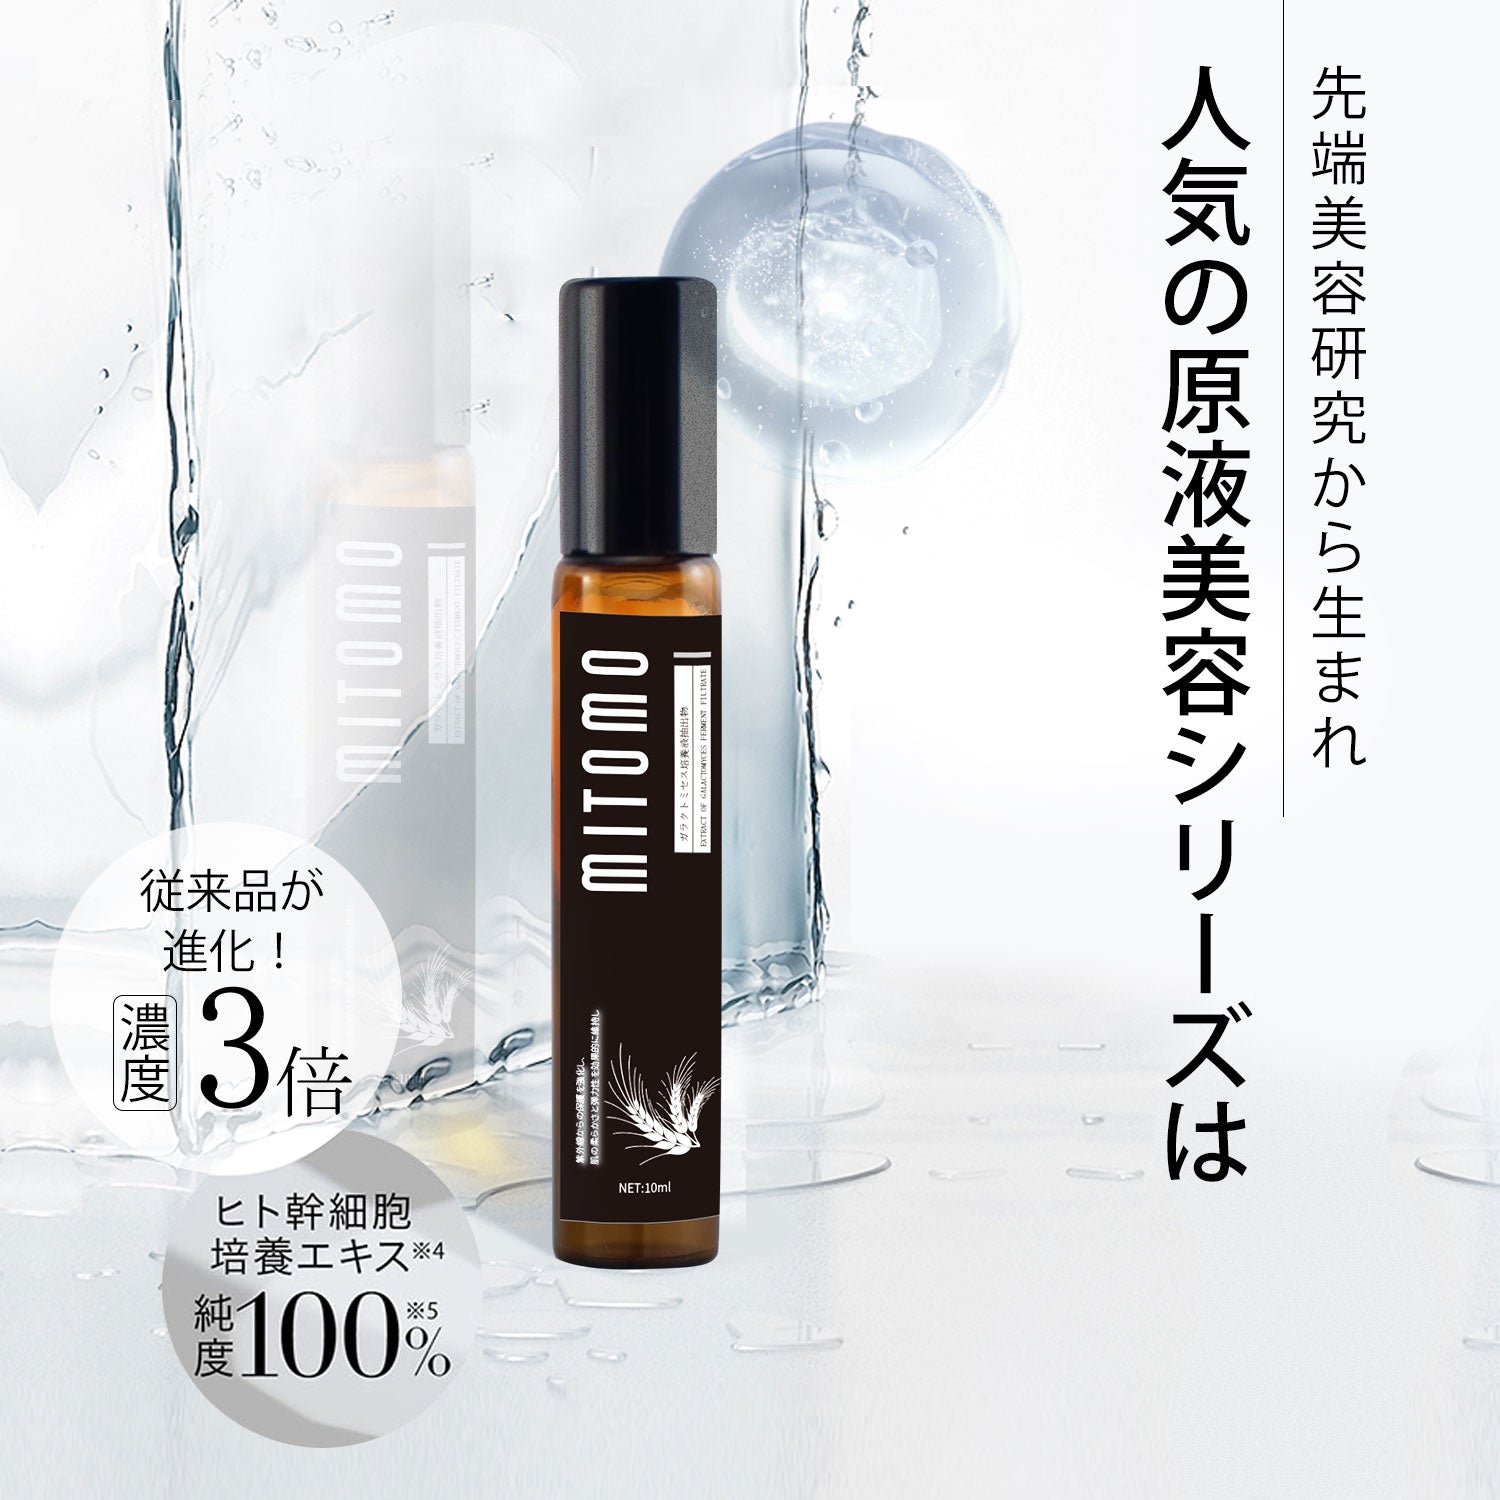 MITOMO 日本製セラミドエキススキンケア 潤い 保湿 フアンペアボトル10mlエキス【EXSA00007-05-010】